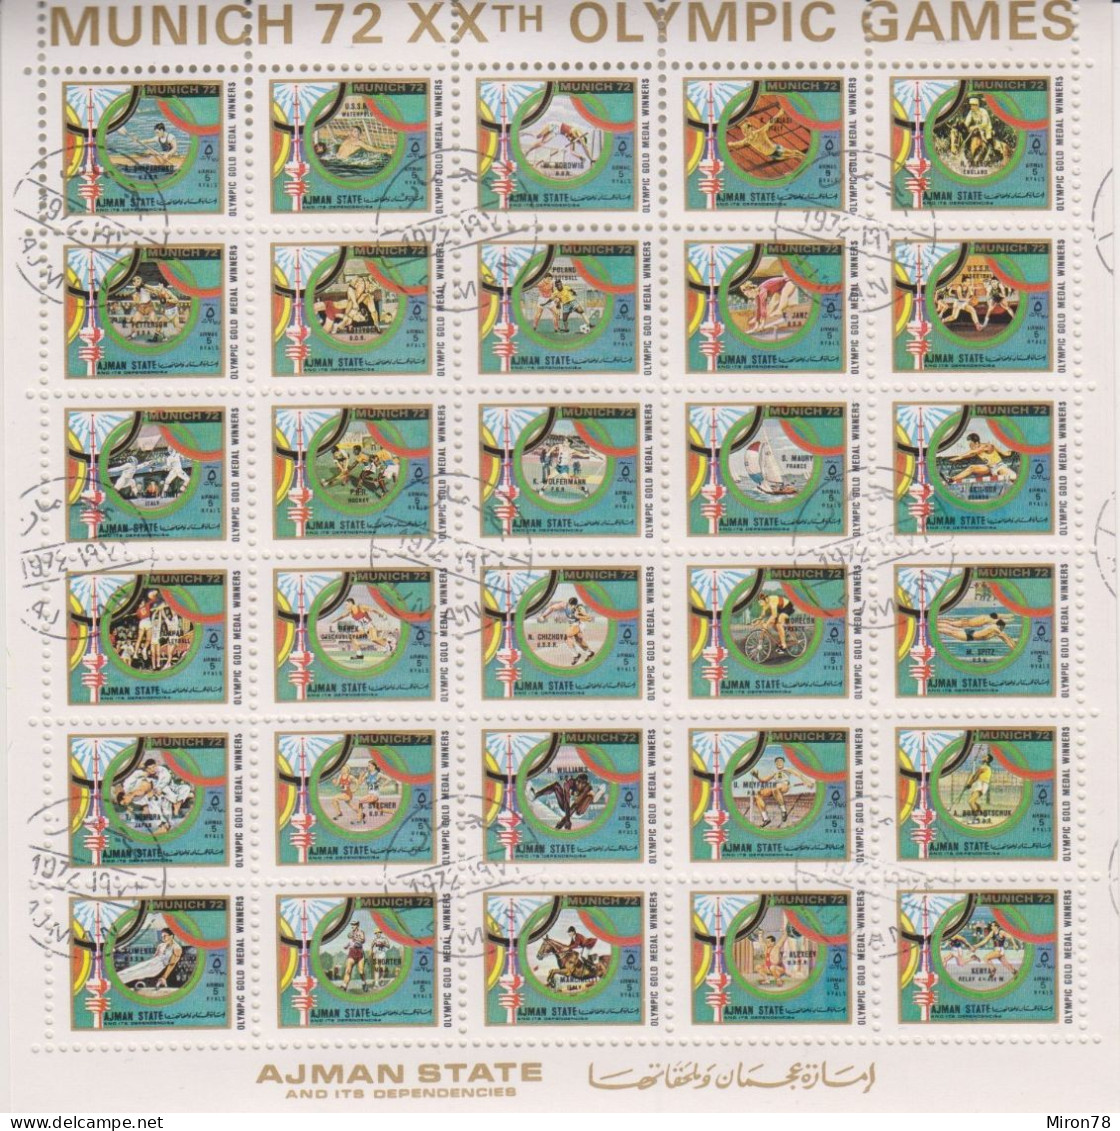 AJMAN OLYMPIC GAMES MUNICH 1972 #1605-34 SH USED (MNH-MICHEL 150 EURO!!!) - Non Classés